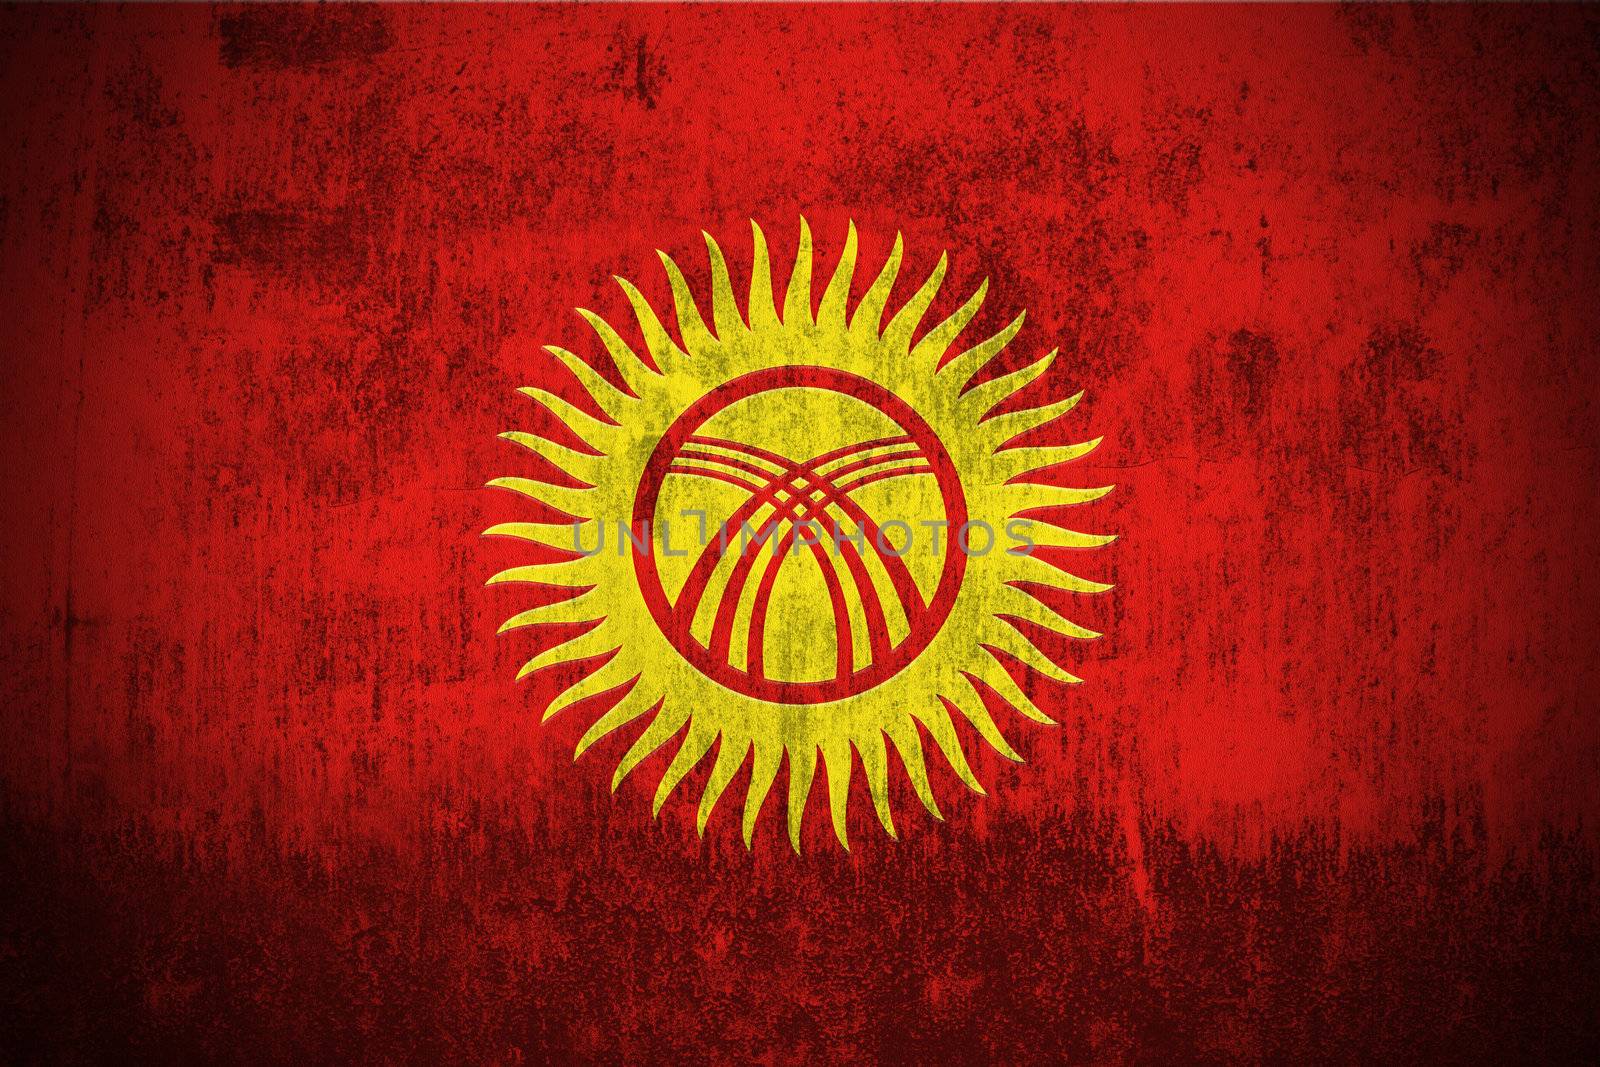 Grunge Flag Of Kyrgyzstan by gilmanshin